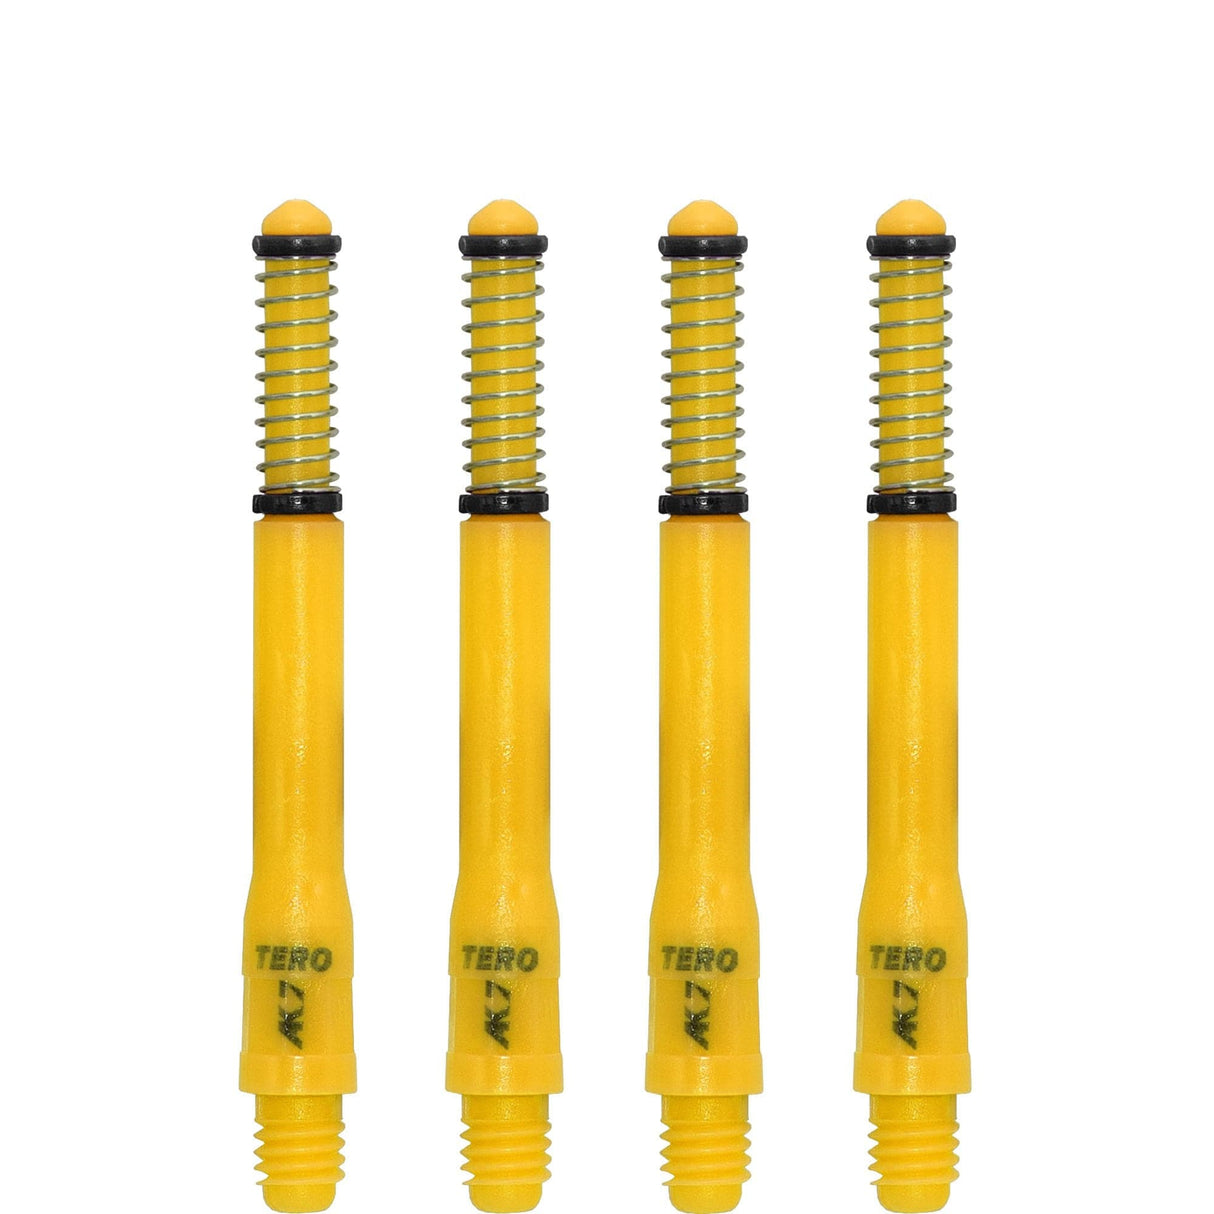 Cuesoul - Dart Shafts - Tero Flight System - AK7 - Standard - Set of 4 - Yellow Cuesoul 43.5mm